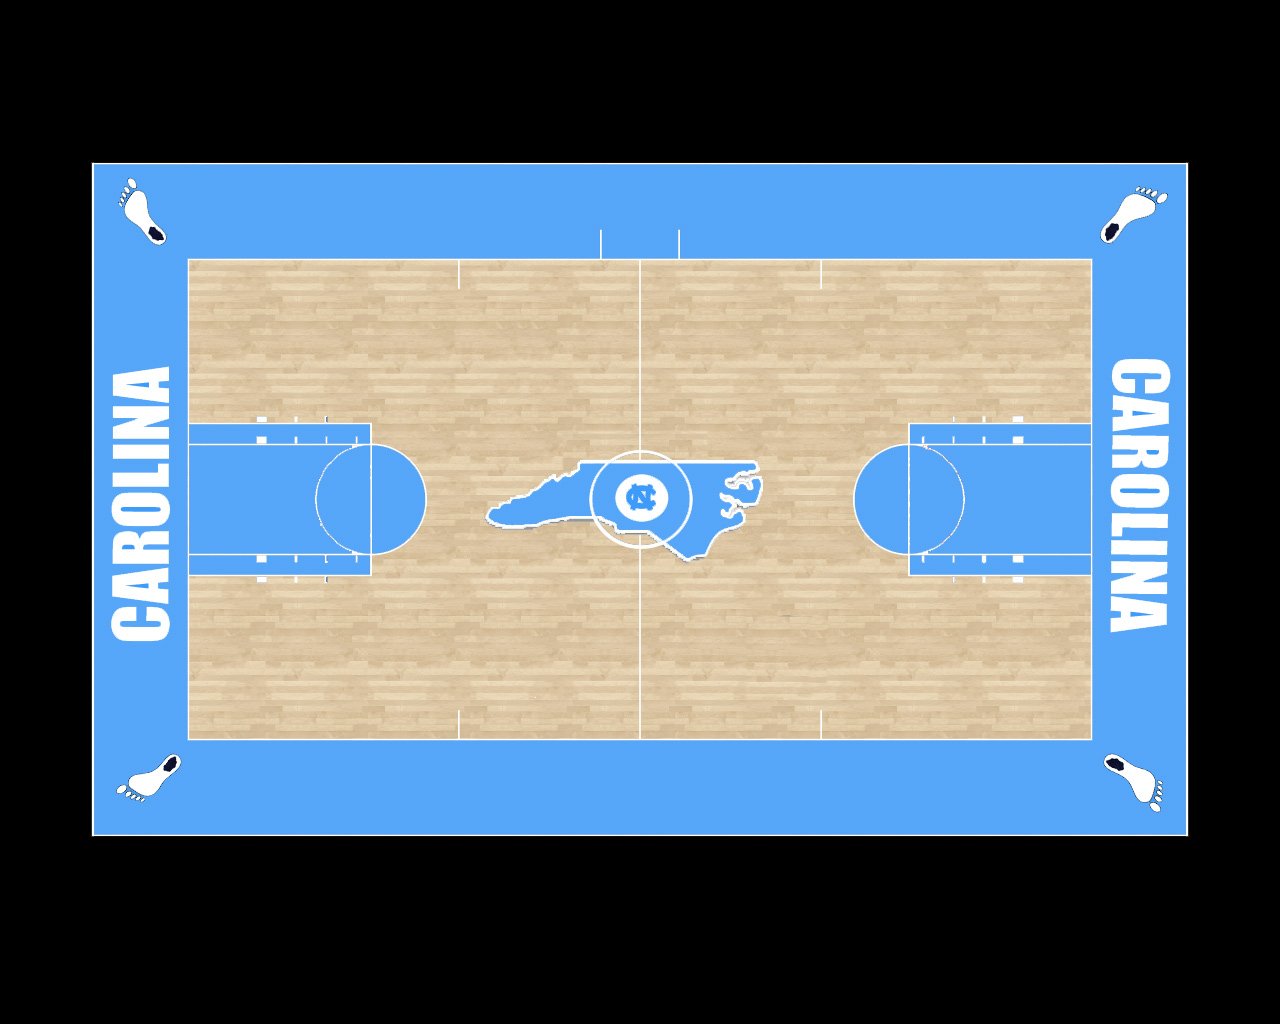 Basketball Court Wallpaper Layouts Background Mrtarheel